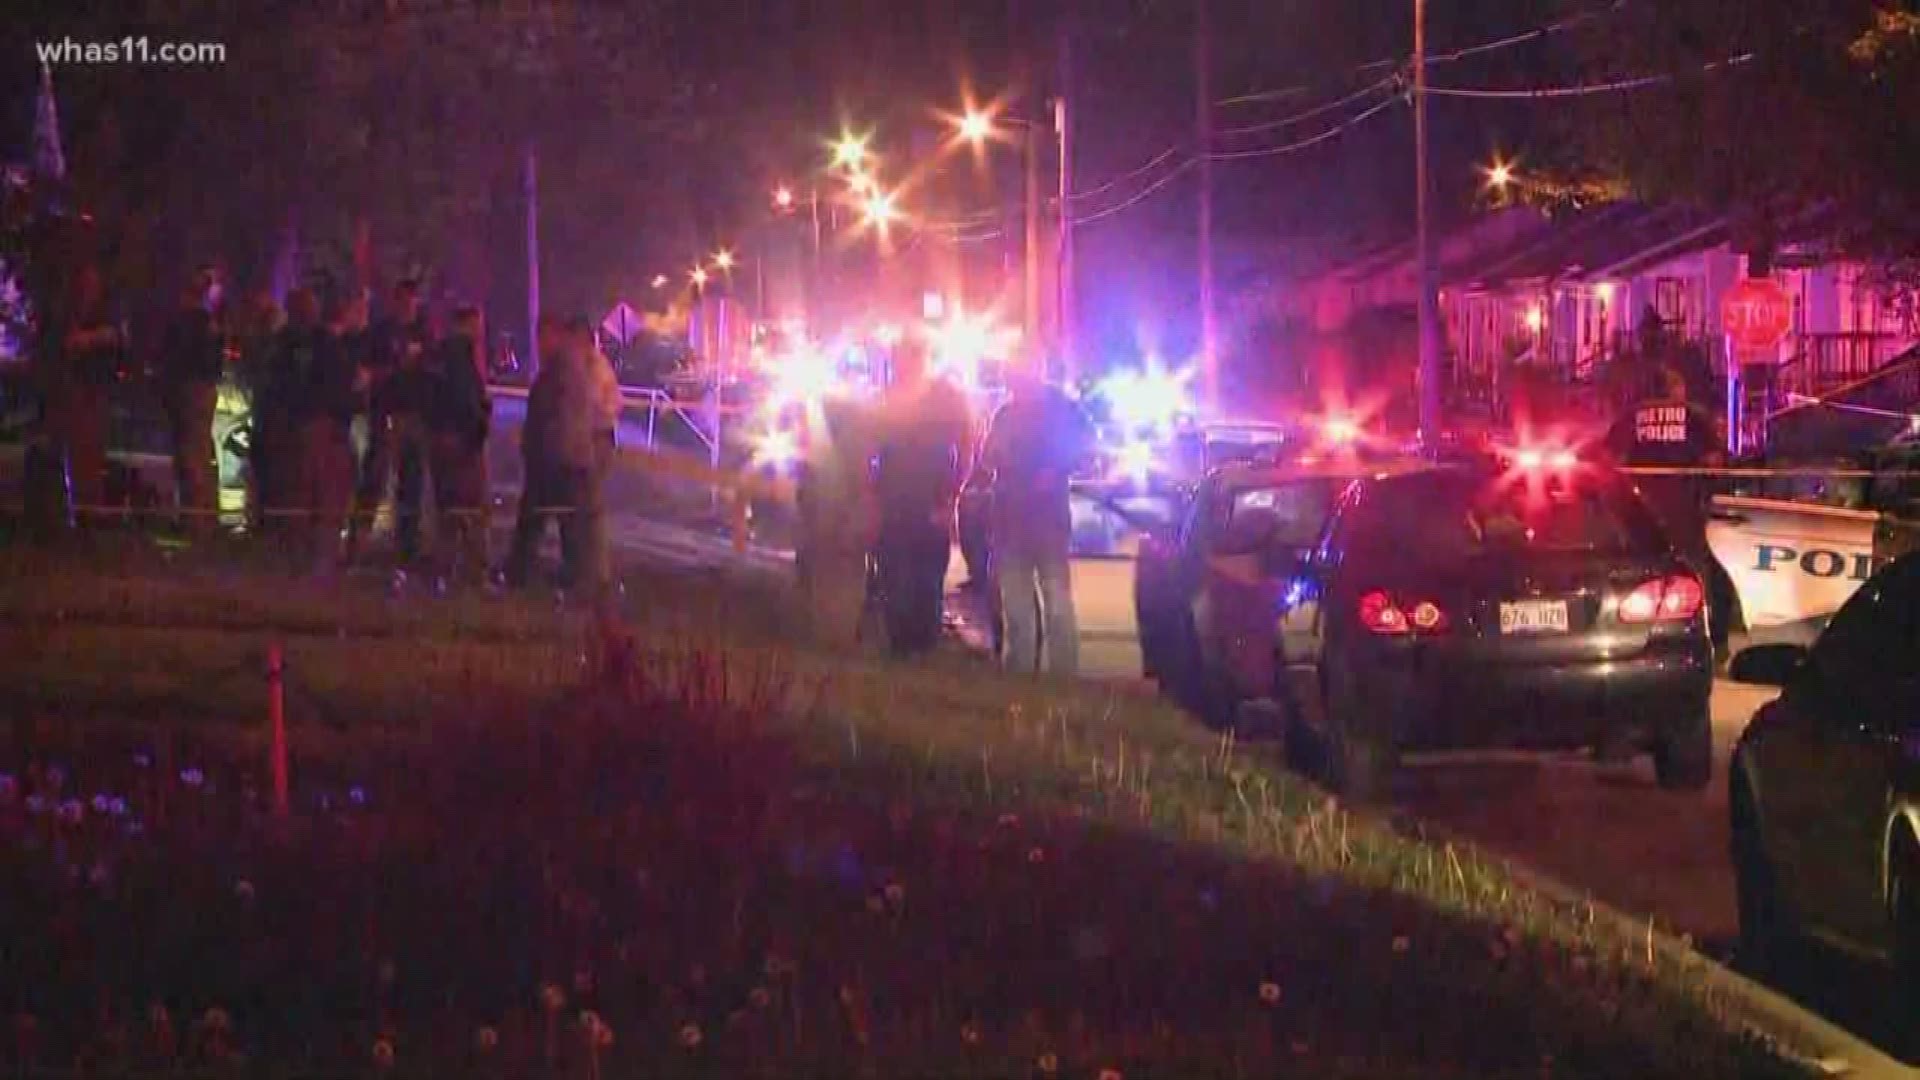 Officer shoots suspect in Shawnee neighborhood